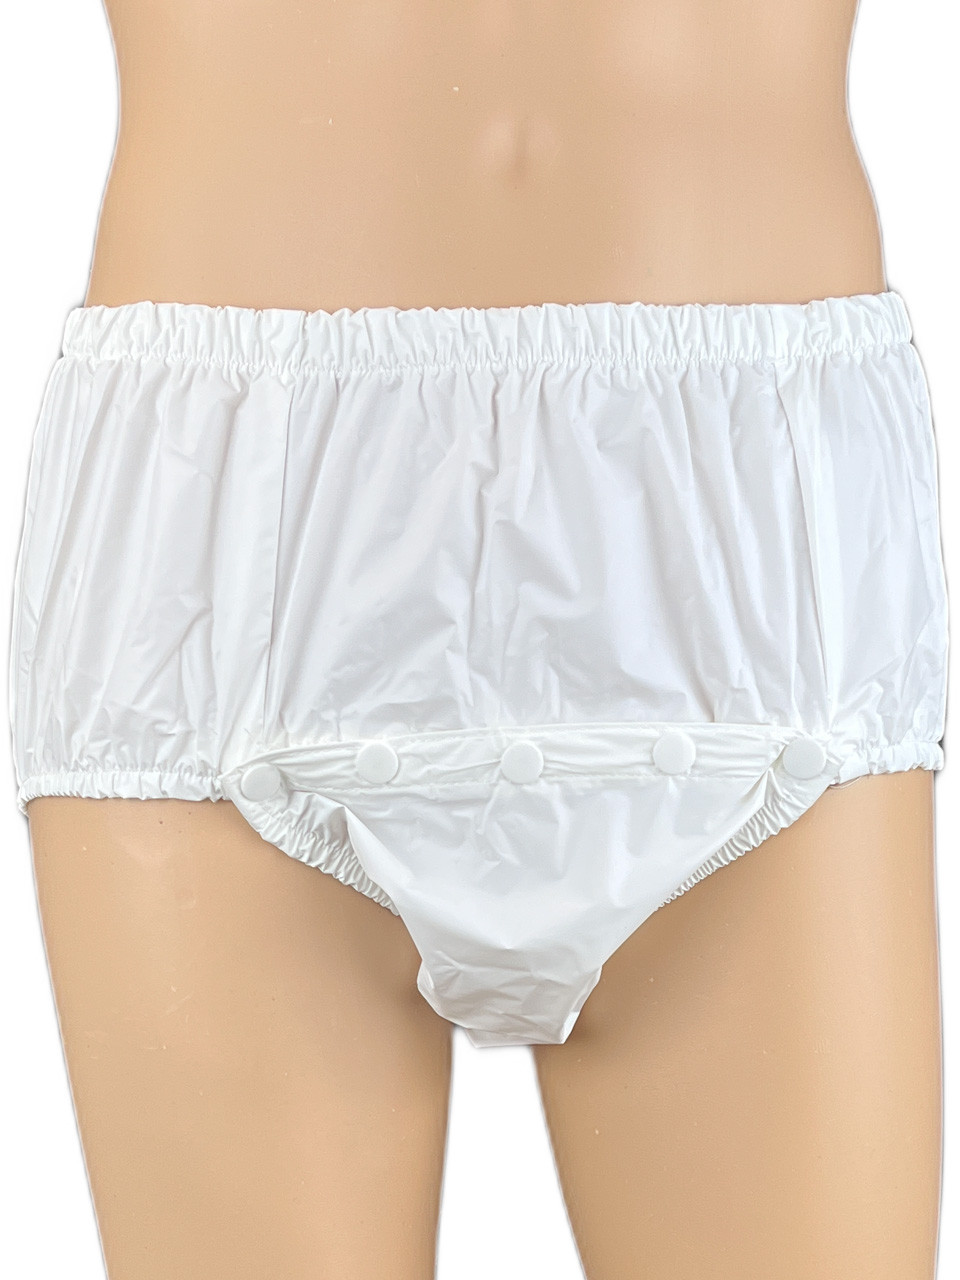 AFDC Super Flex Adult Plastic Pants Angel Fluff Diapers